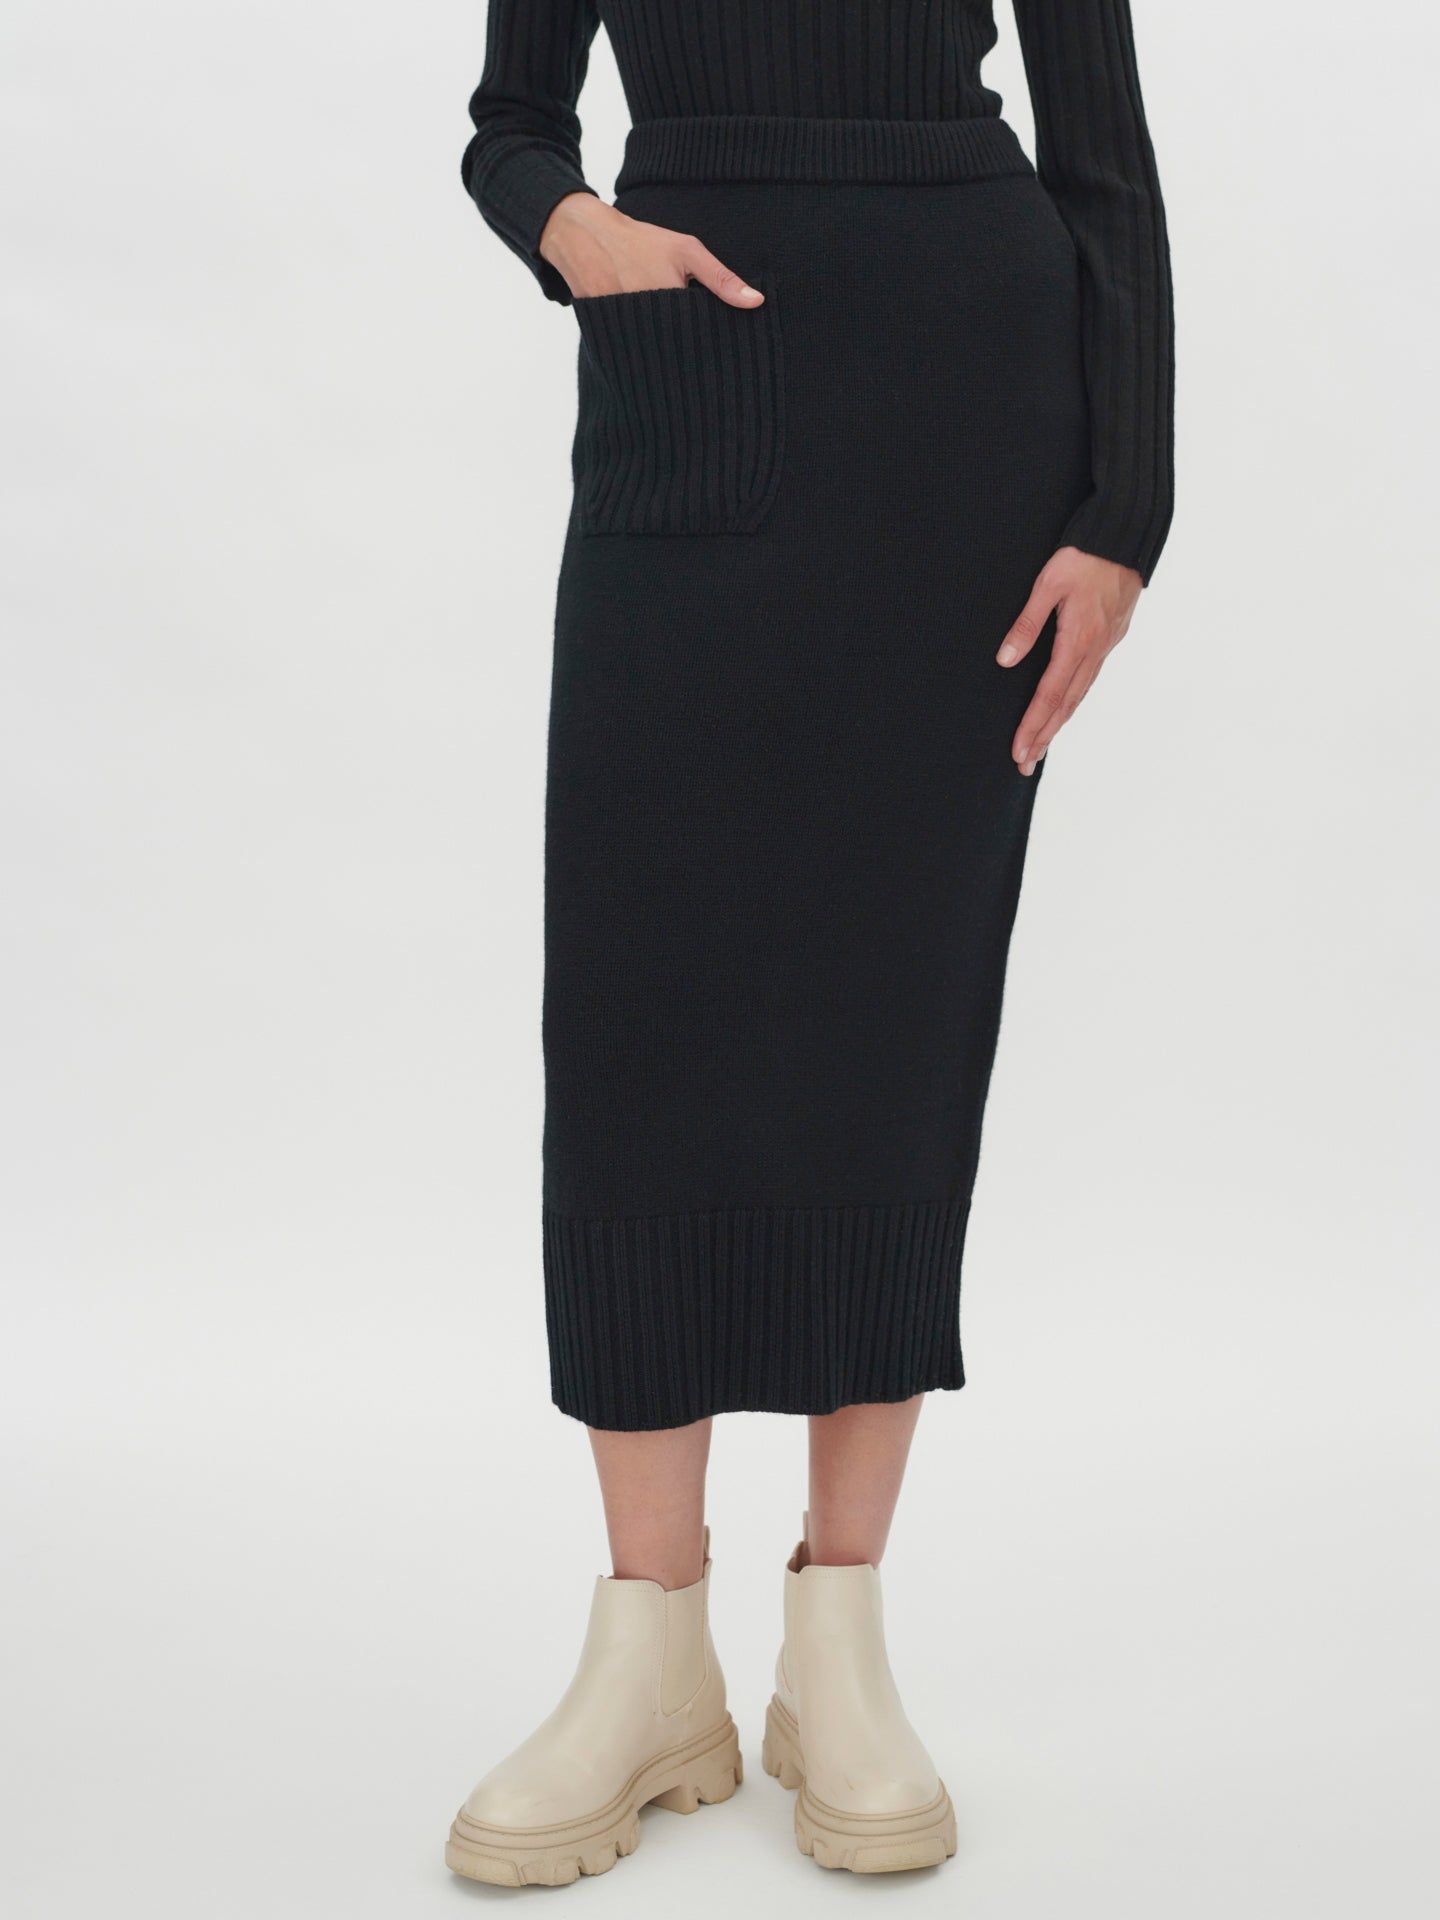 Women's Cashmere Long Pencil Skirt Black - Gobi Cashmere